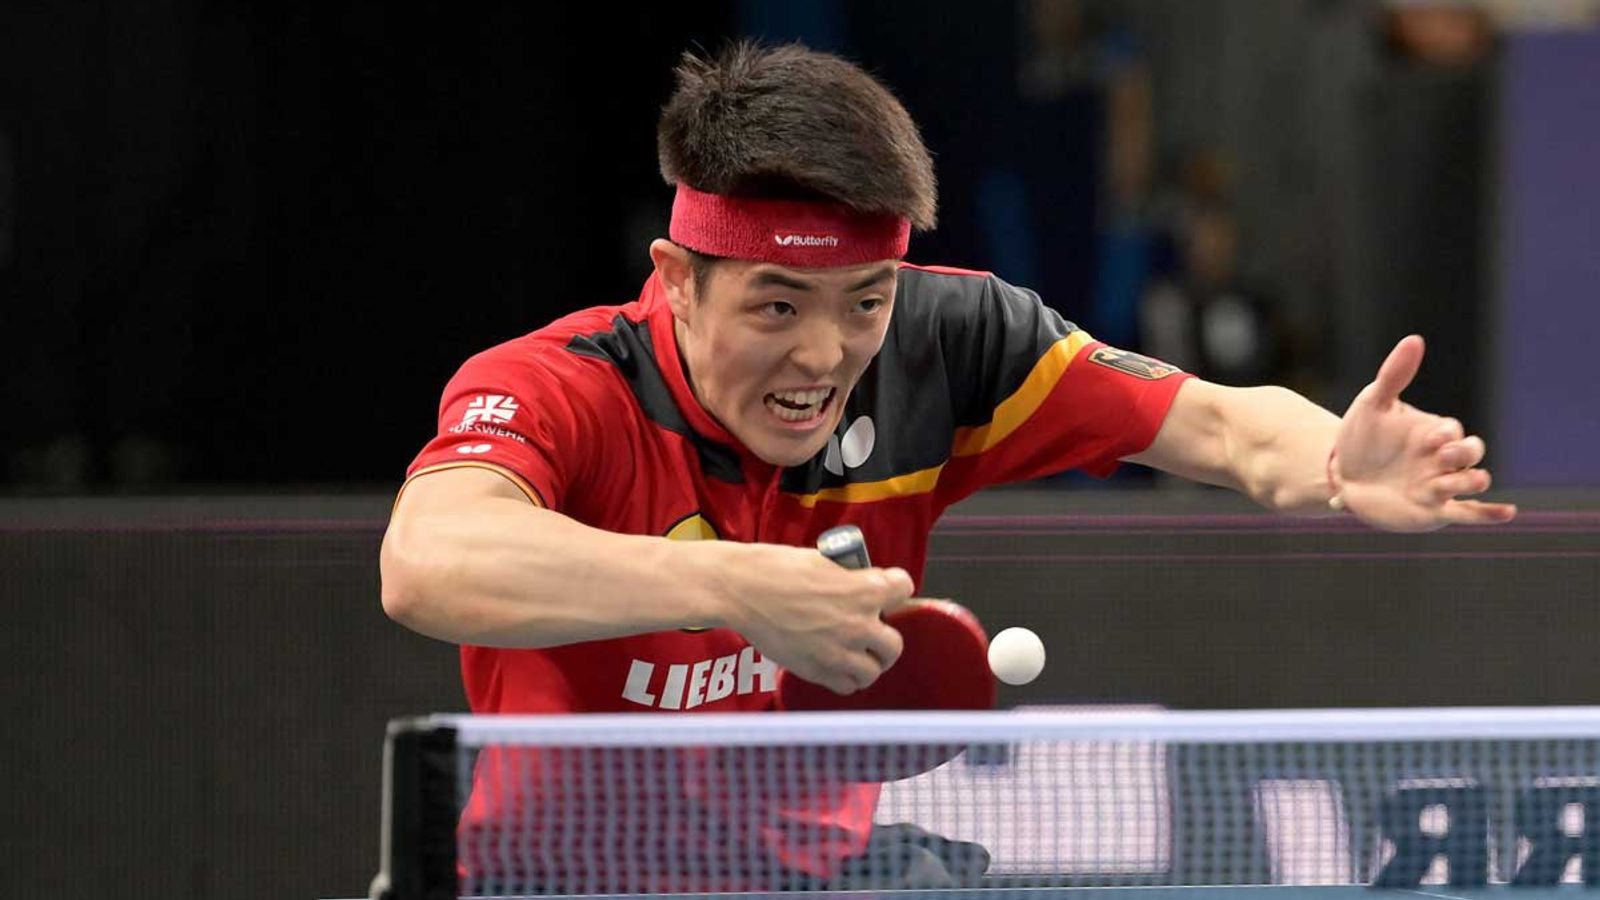 Tischtennis-EM in München Dang Qiu holt sich den Titel Mehr Sport News Sky Sport